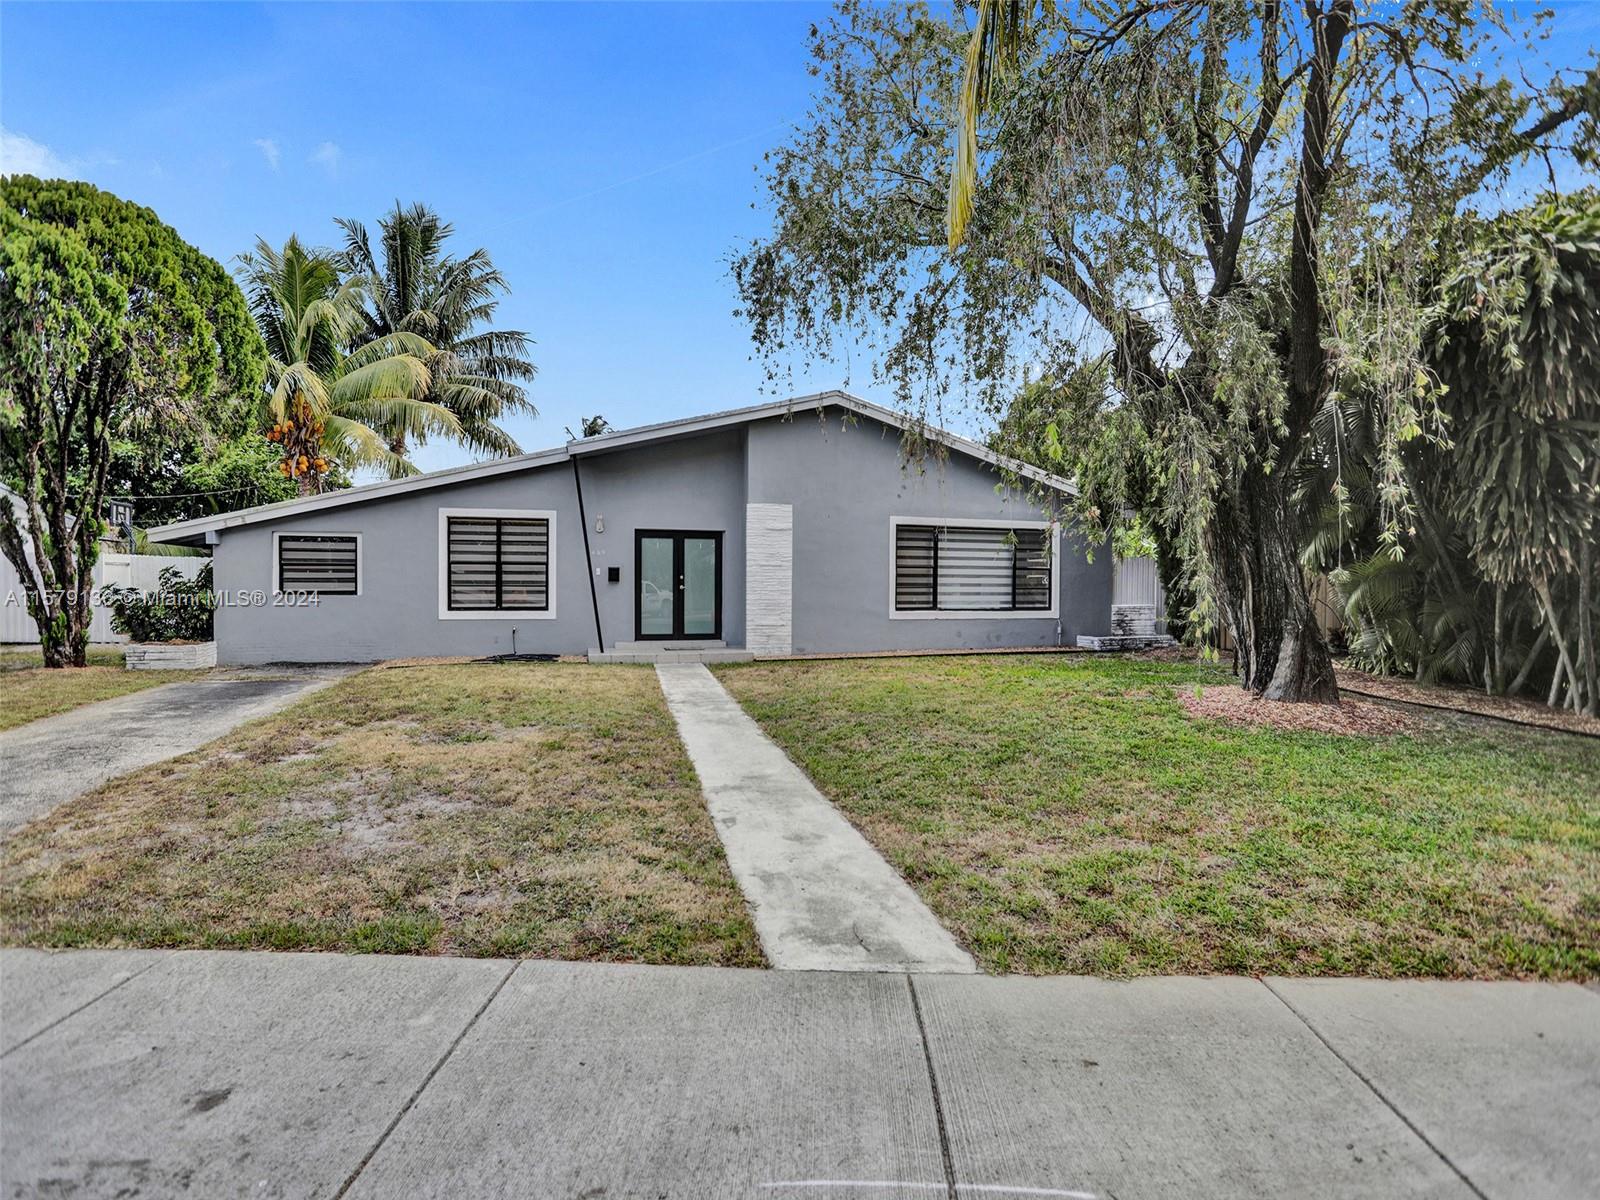 Property for Sale at 460 Ne 178th St, North Miami Beach, Miami-Dade County, Florida - Bedrooms: 4 
Bathrooms: 2  - $840,000